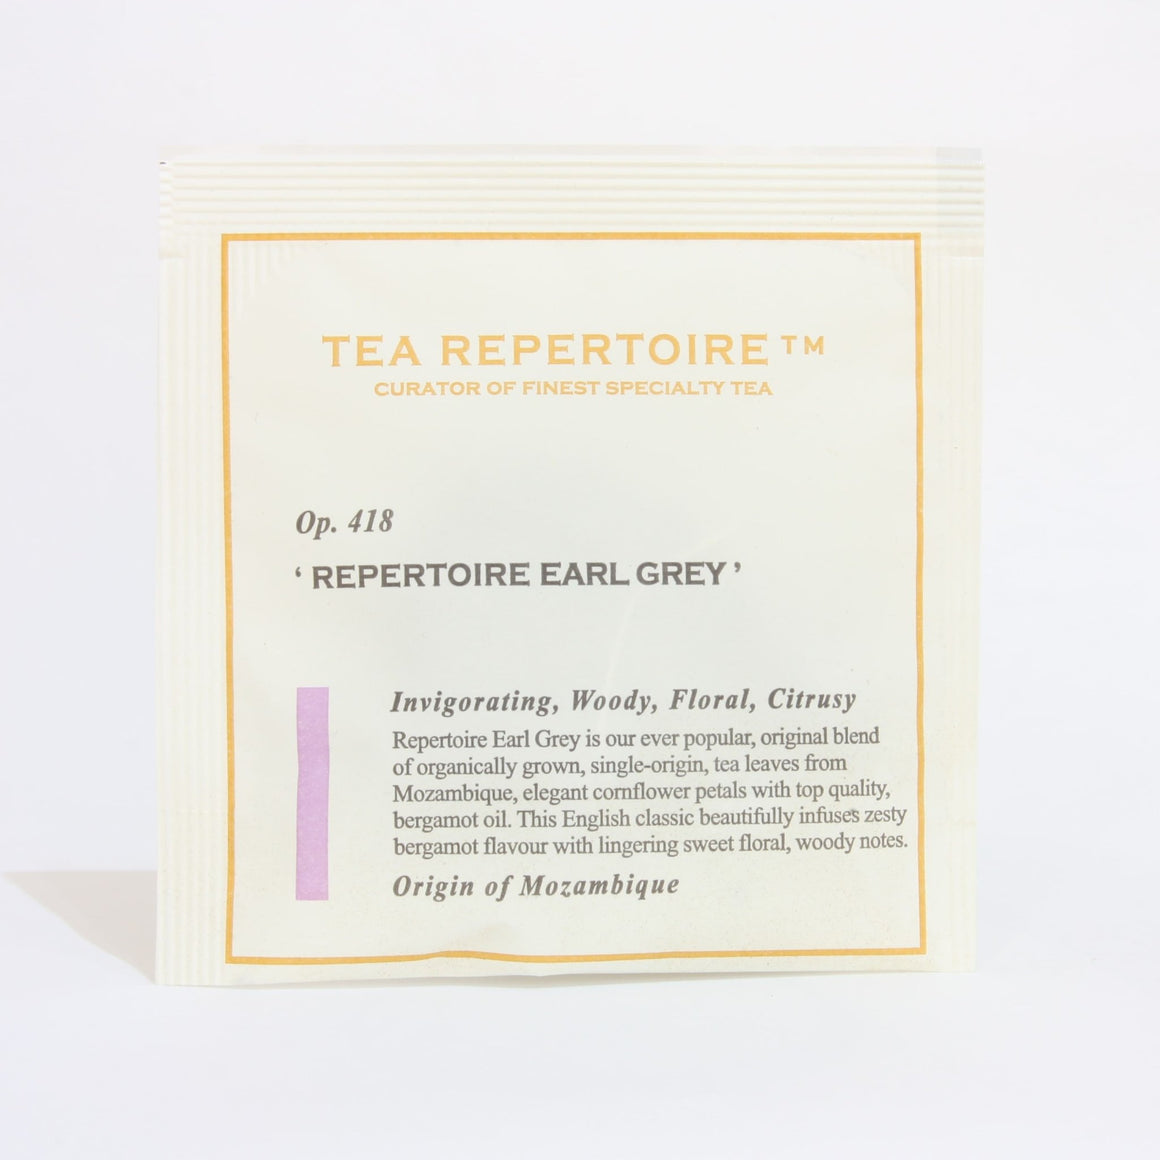 Individually Wrapped Repertoire Earl Grey Pyramid Tea Bags - Tea Repertoire